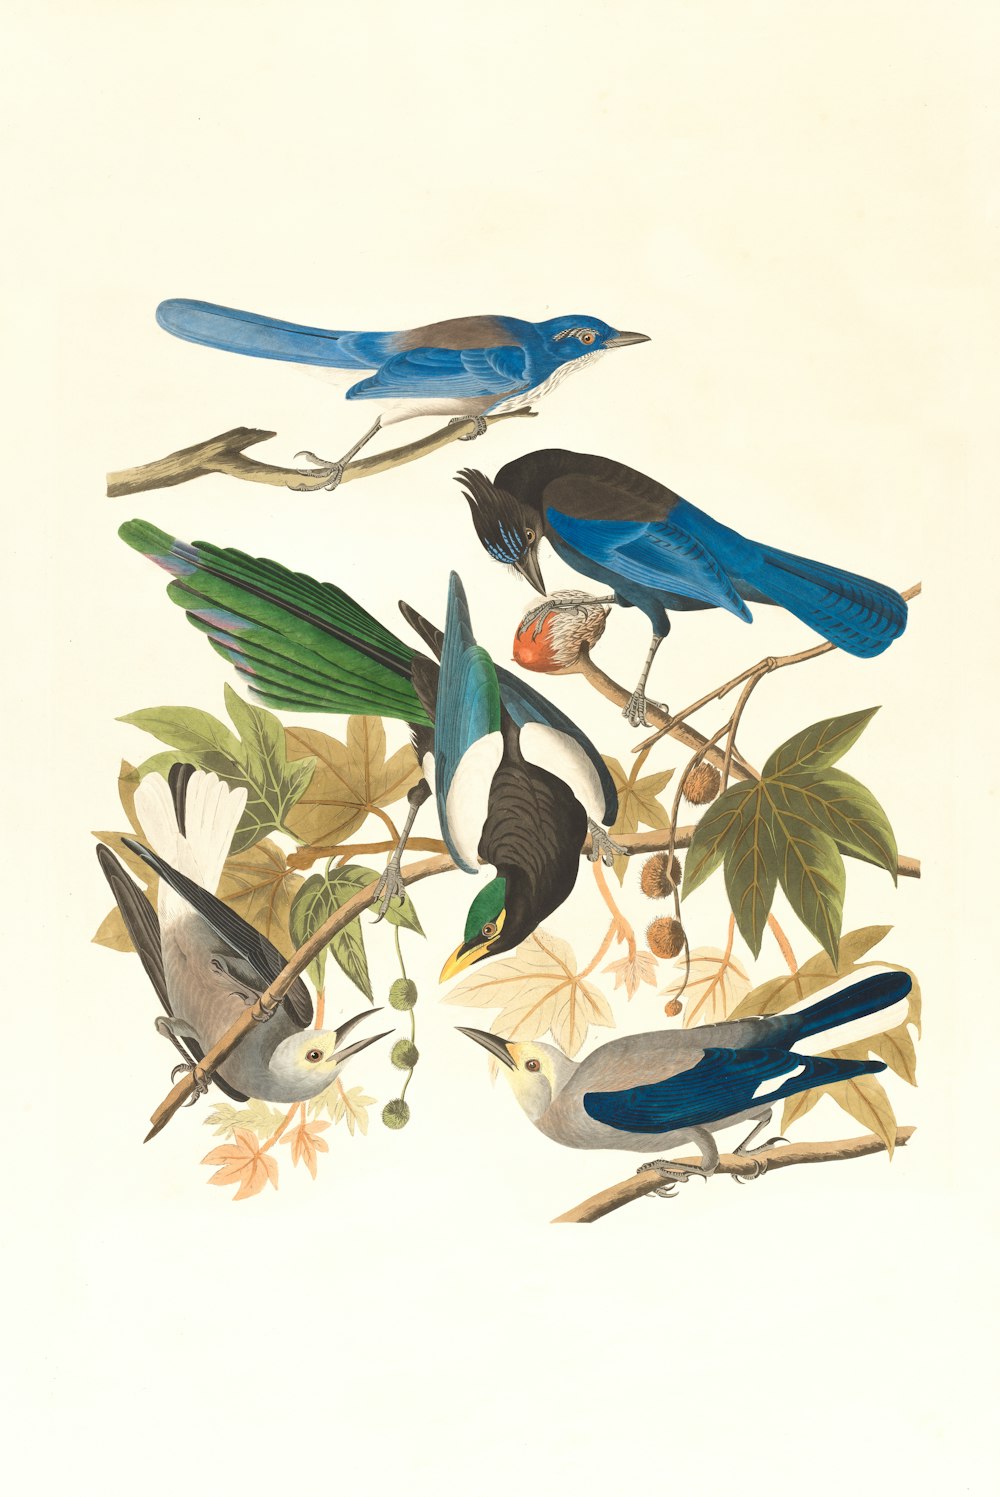 blue and black bird on tree branch